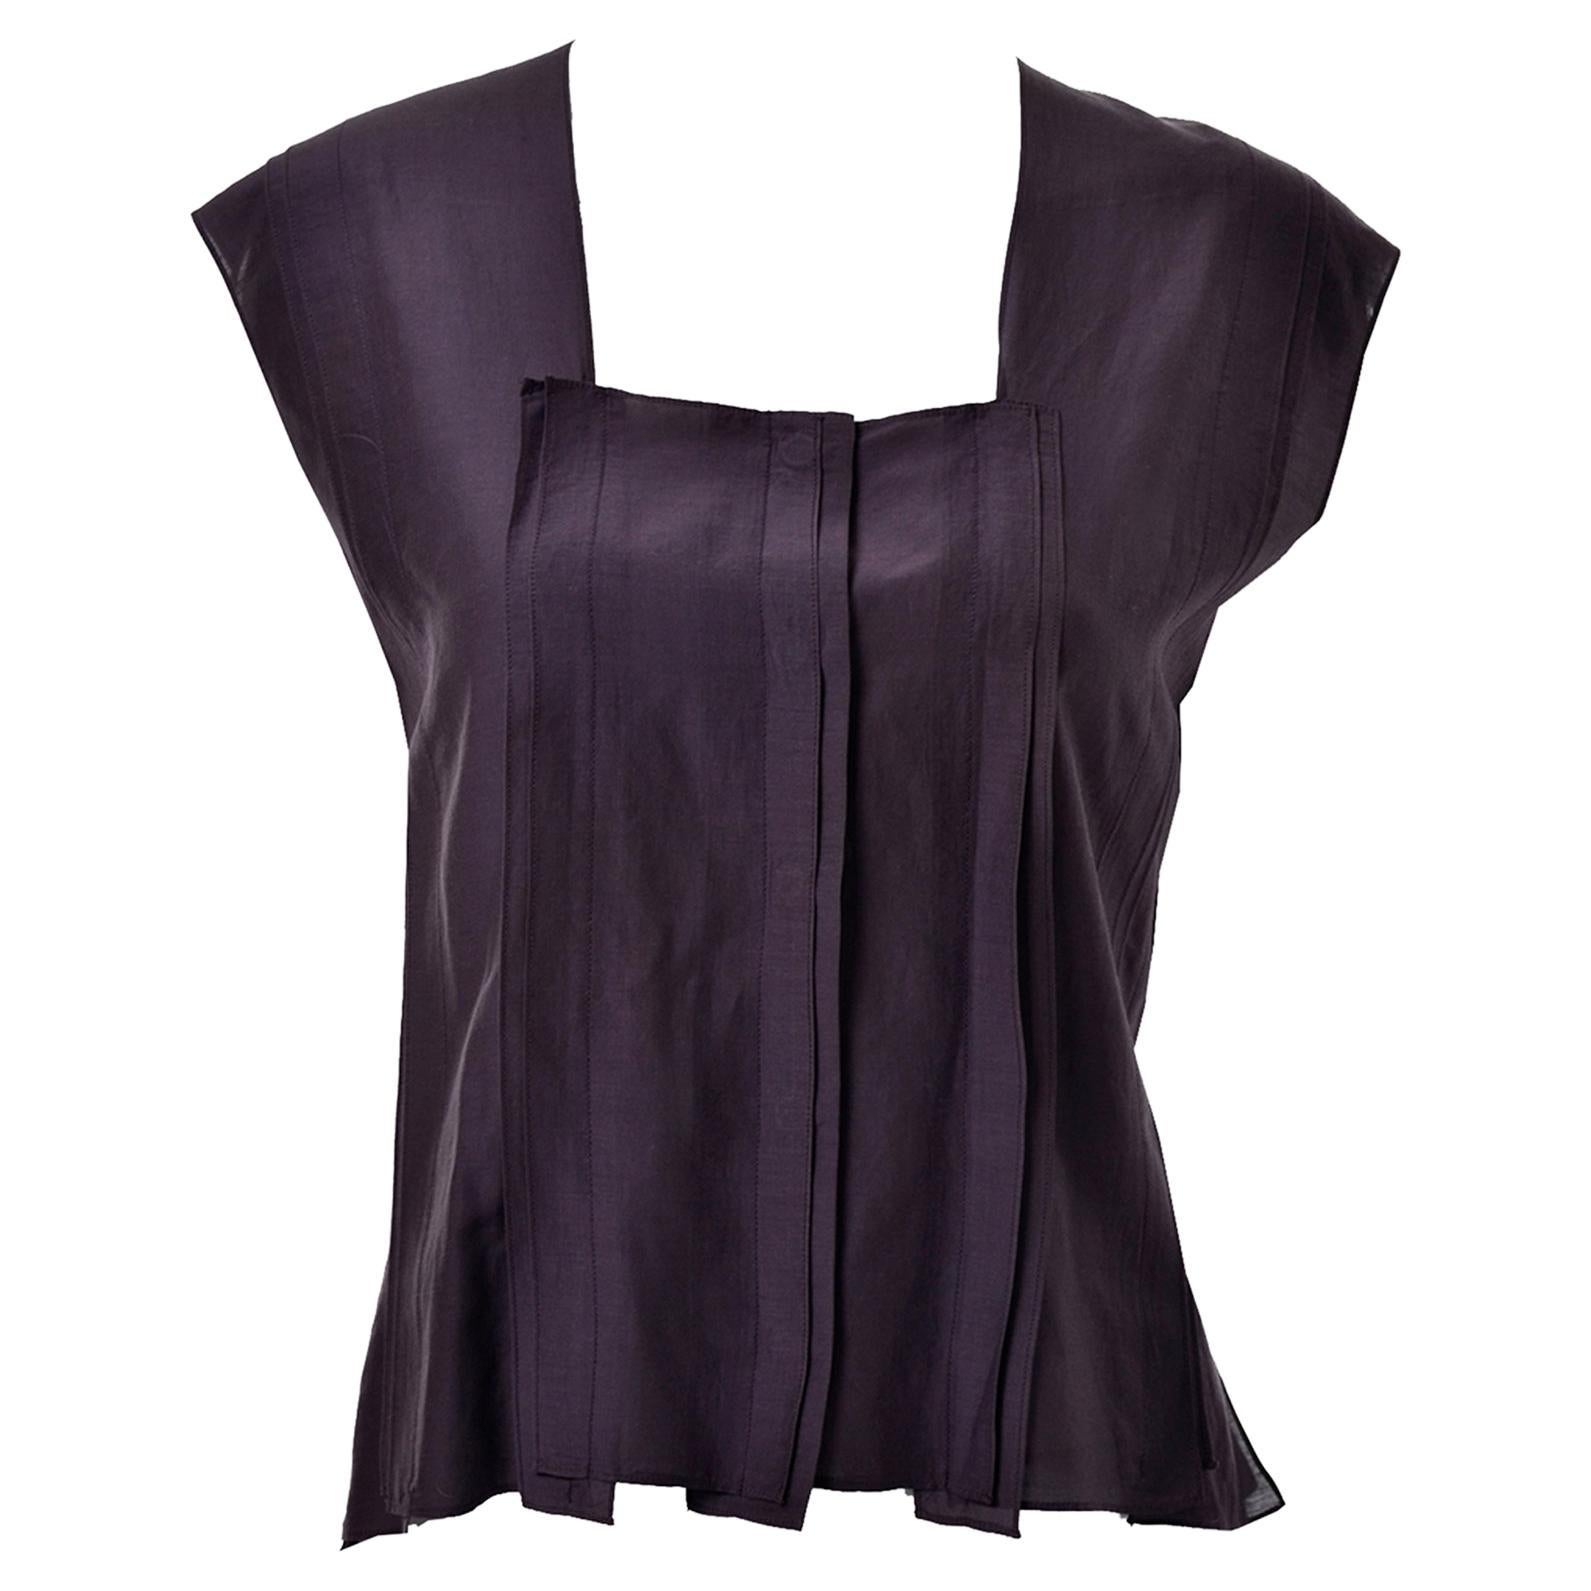 Yves Saint Laurent Aubergine Purple Sleeveless Cotton top